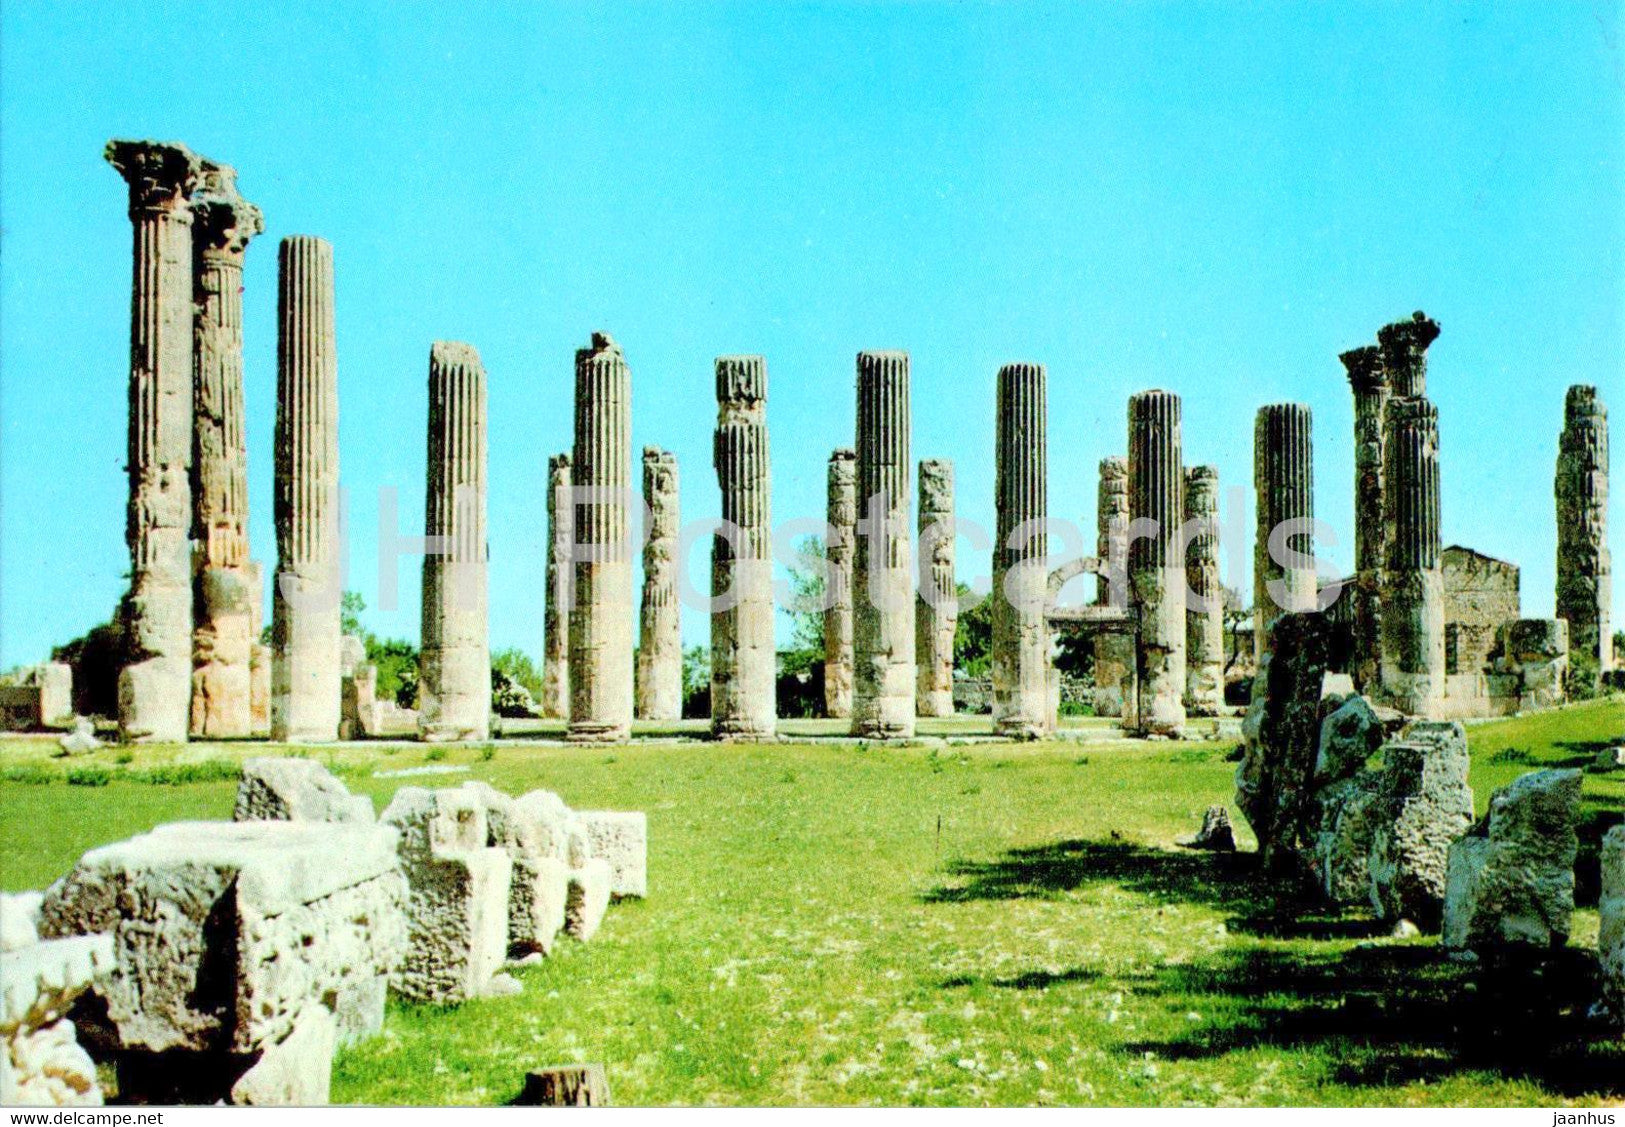 Icel - Mersin - General view of Zeus Temple - ancient world - Turkey - unused - JH Postcards